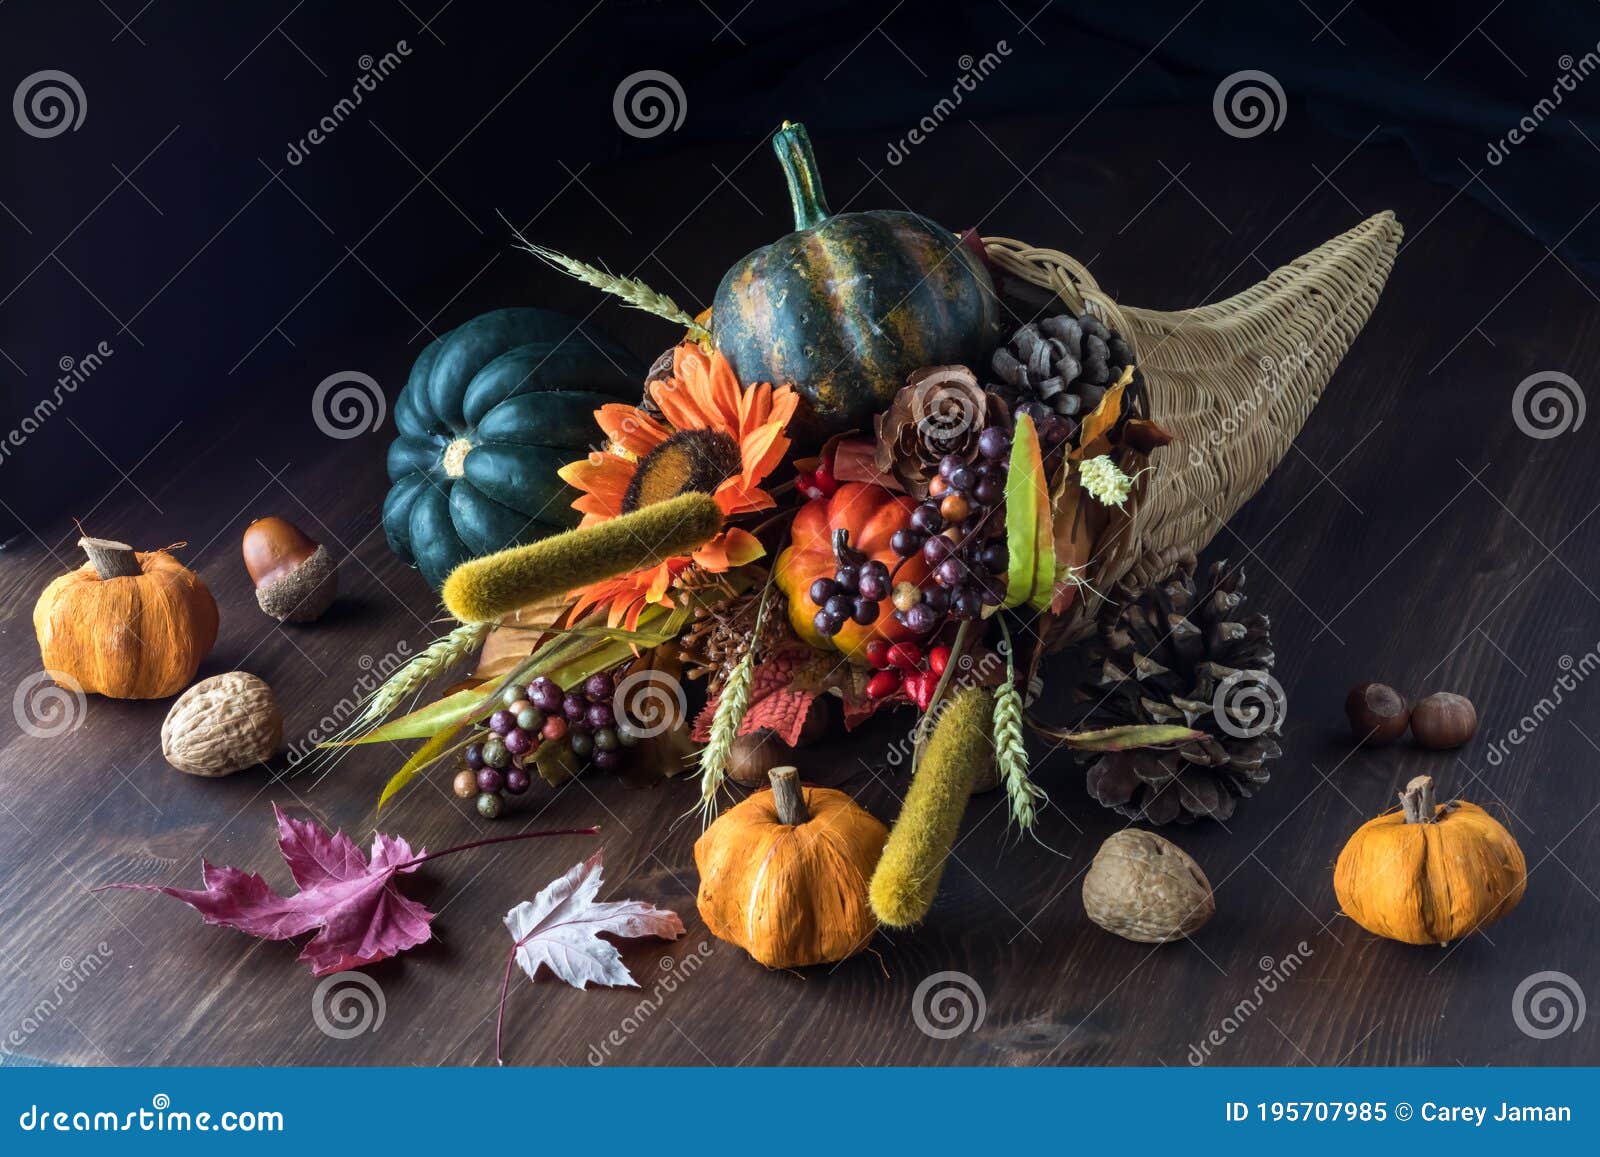 cornucopia centrepiece filled with autumn decorations against a black background.